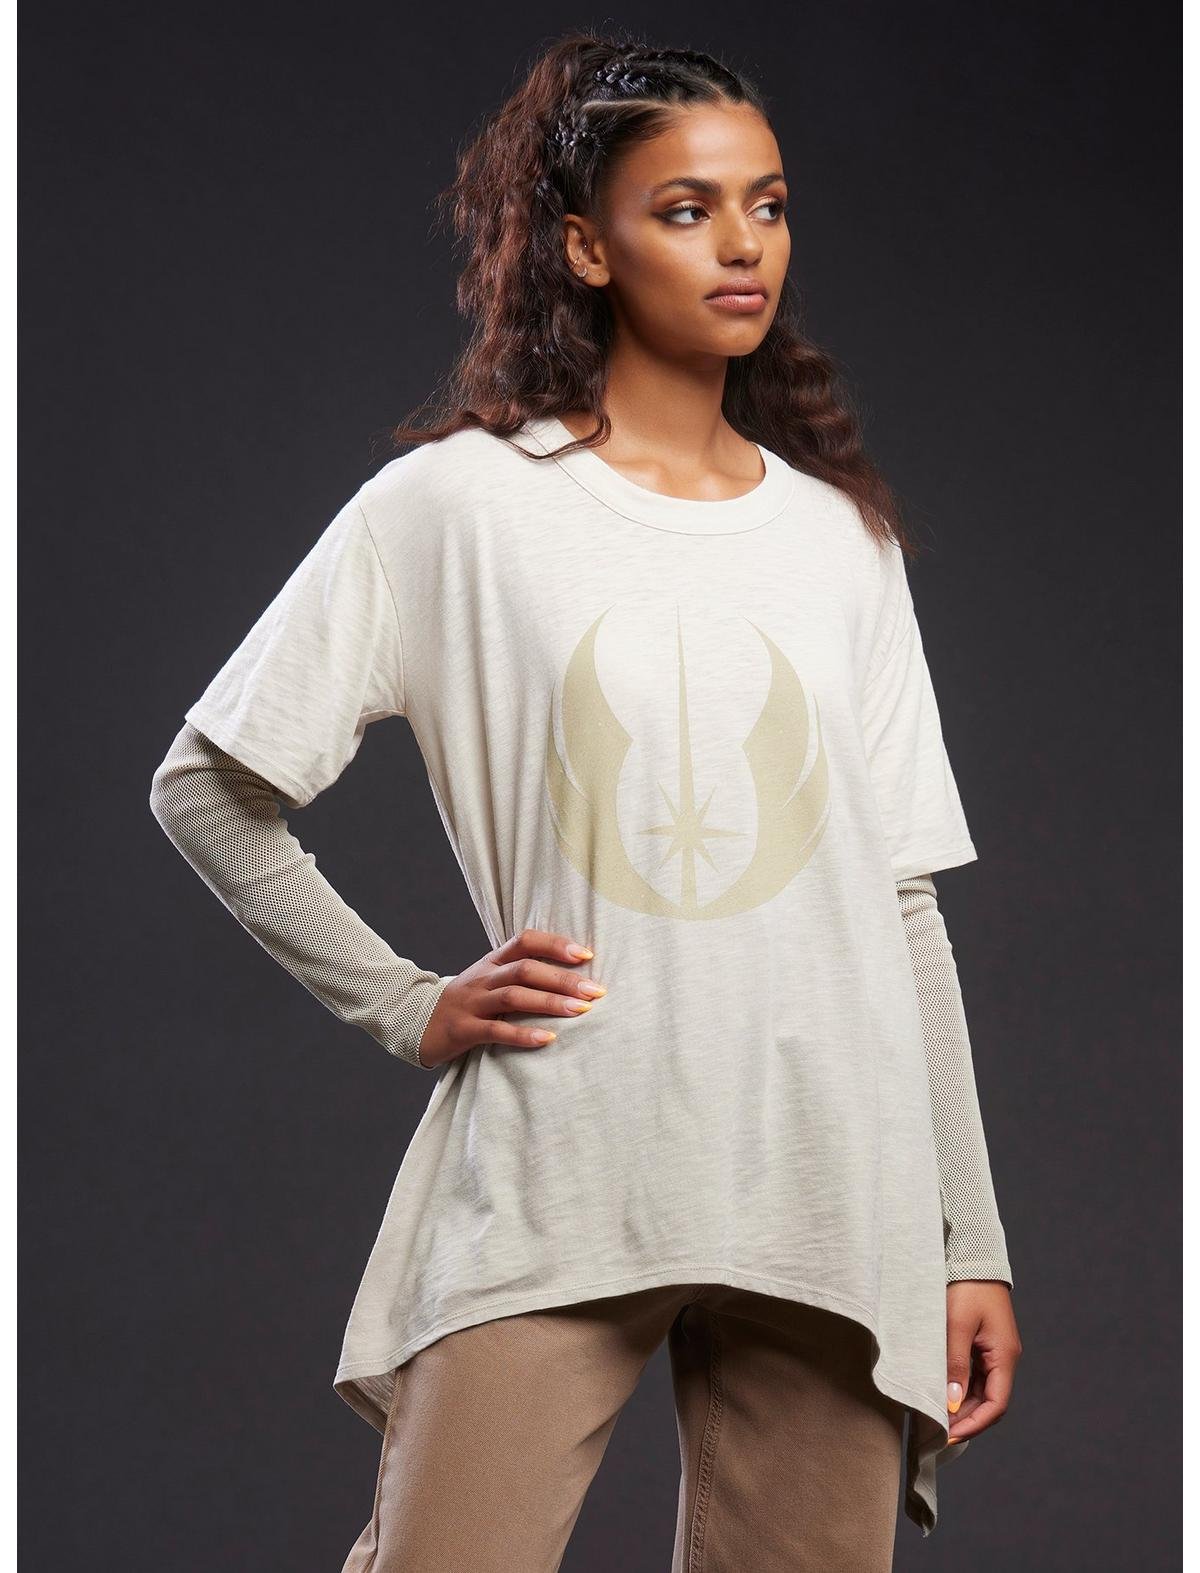 Her Universe Star Wars Obi-Wan Kenobi Jedi Symbol Twofer Long-Sleeve T-Shirt